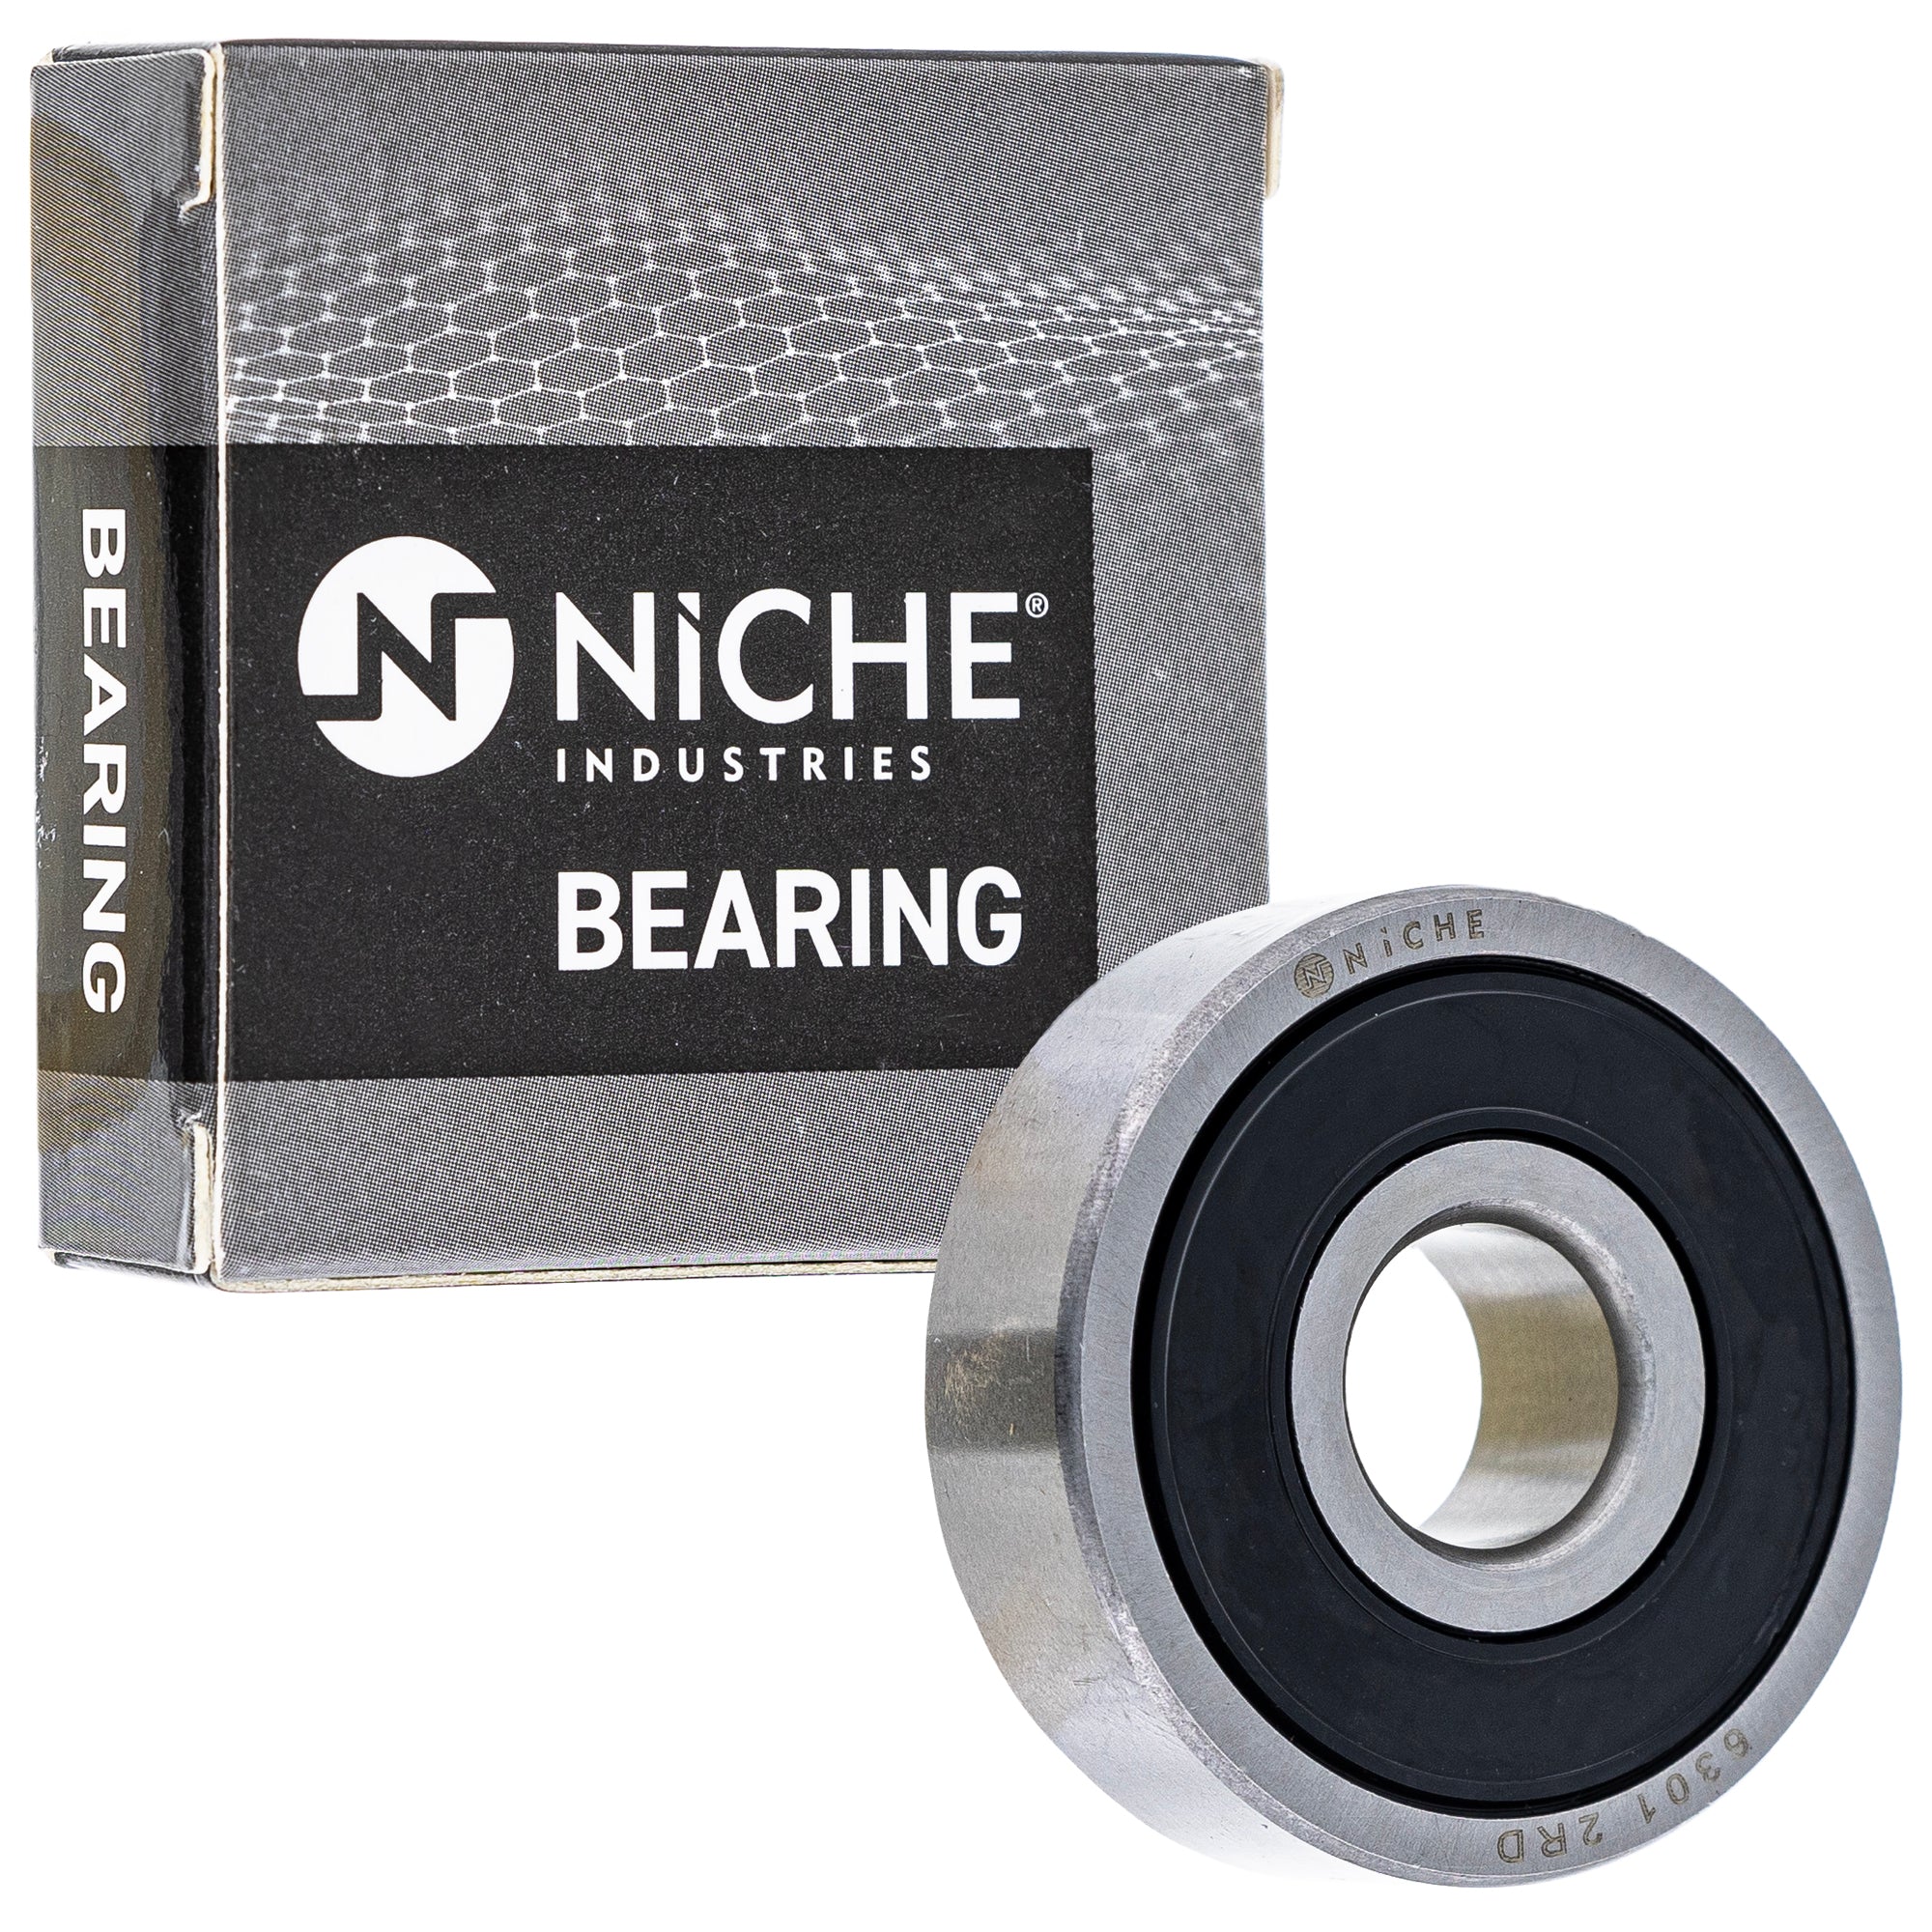 NICHE 519-CBB2342R Bearing 10-Pack for zOTHER ZB50 XR80R XR80 XR75